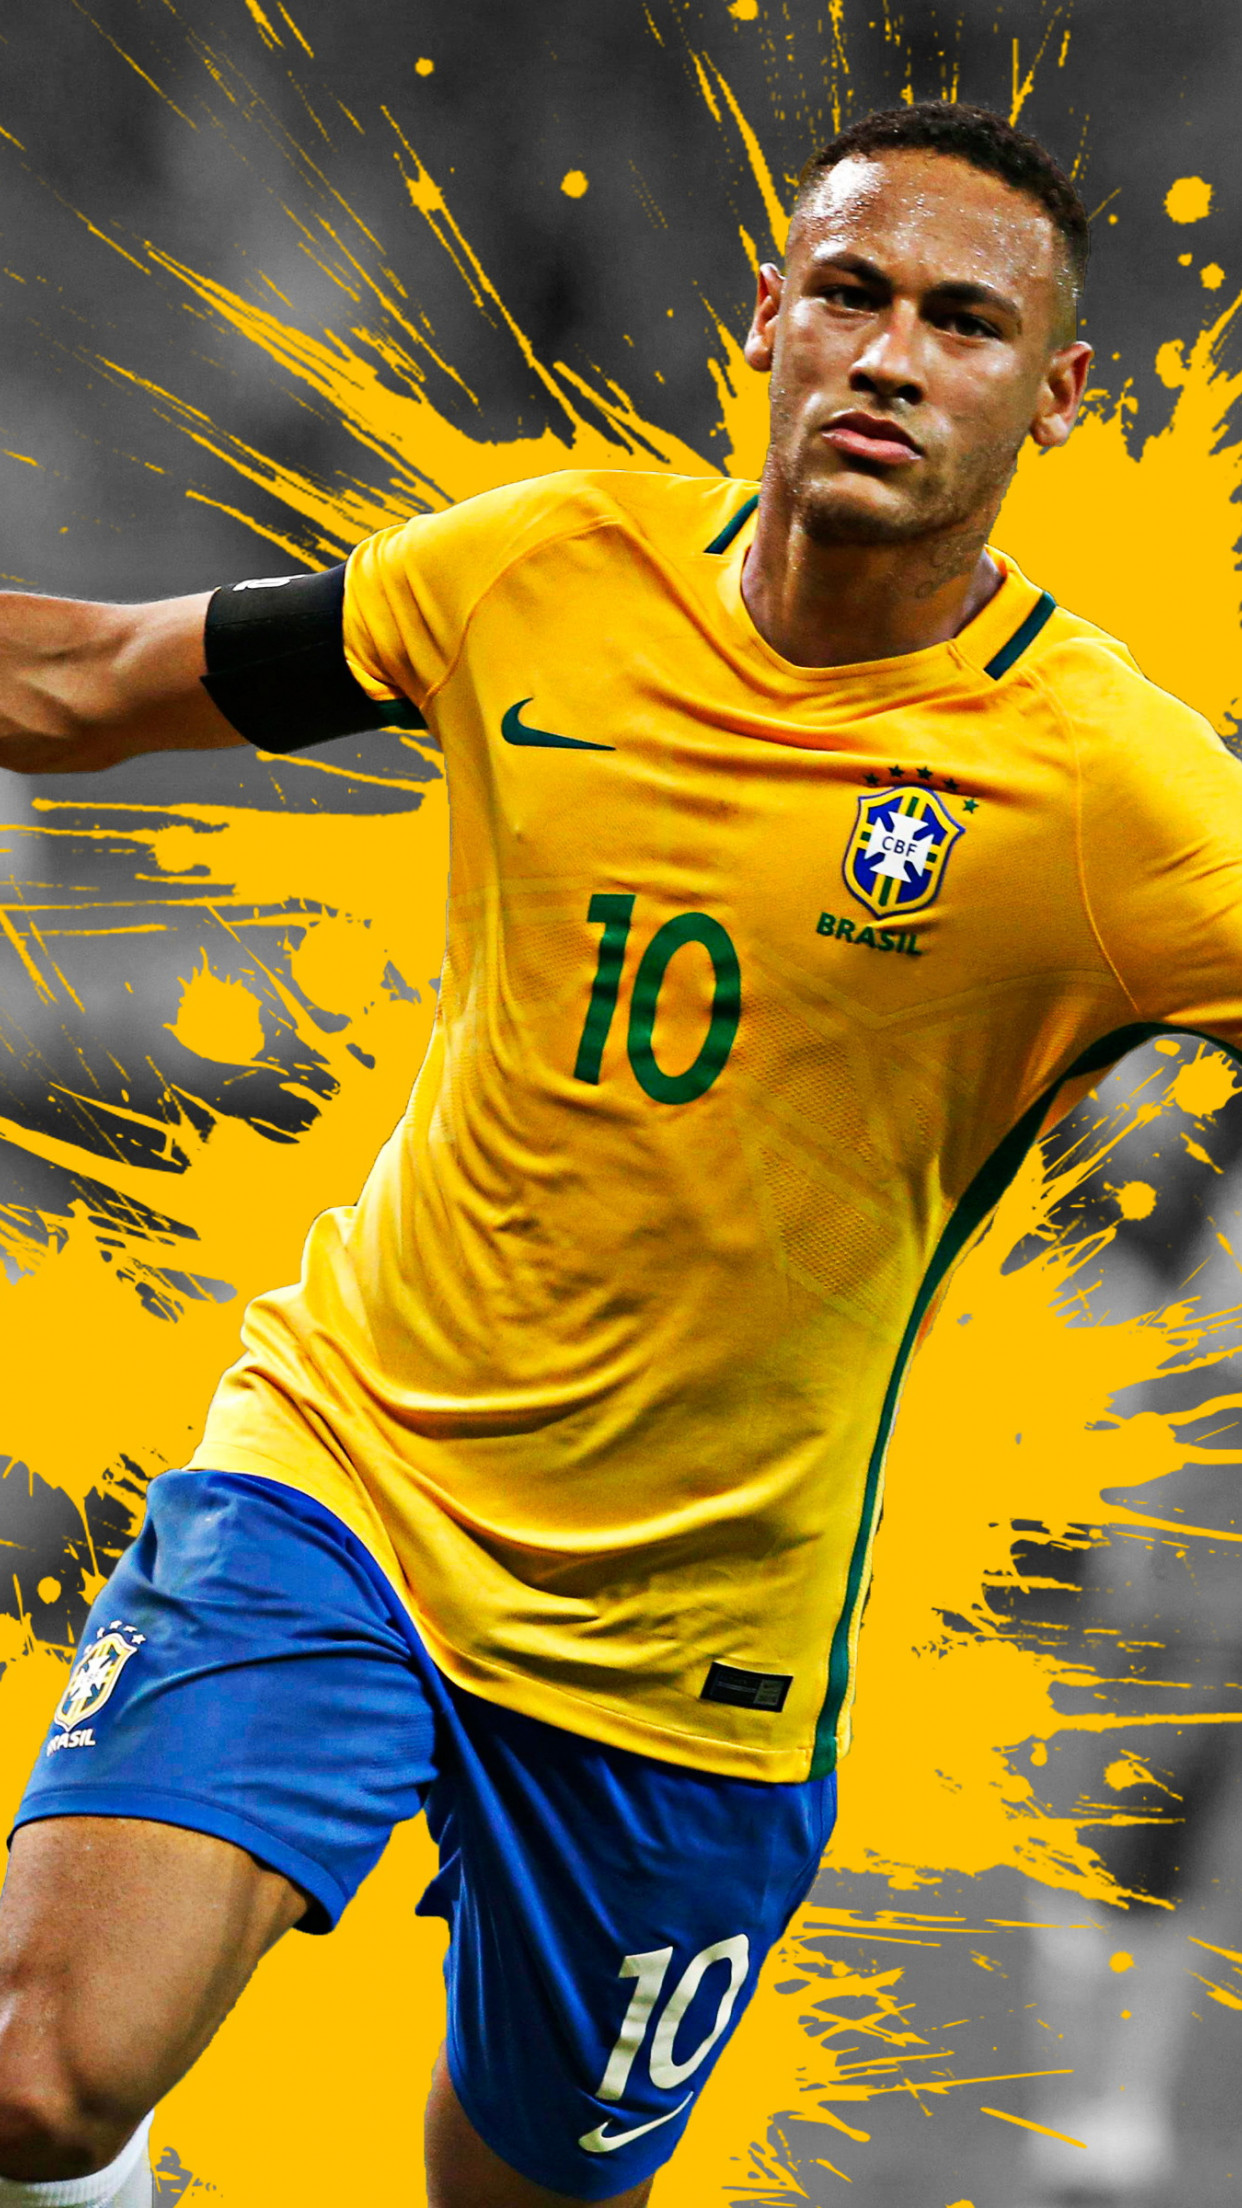 Download wallpaper: Neymar for Brazil national team 1242x2208